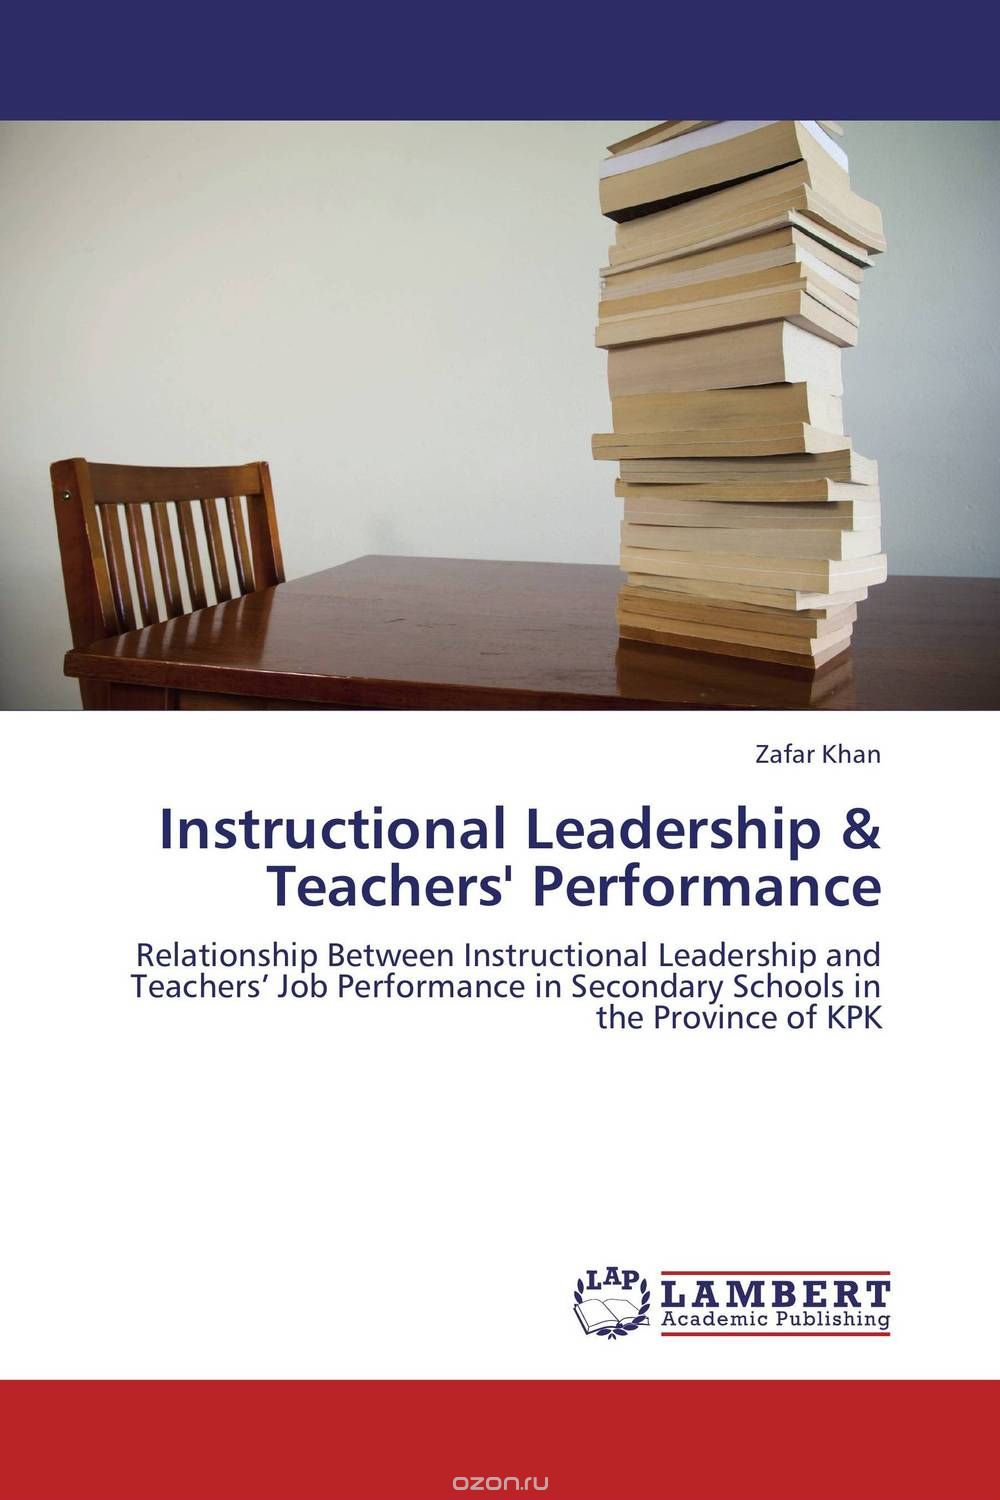 Скачать книгу "Instructional Leadership & Teachers' Performance"